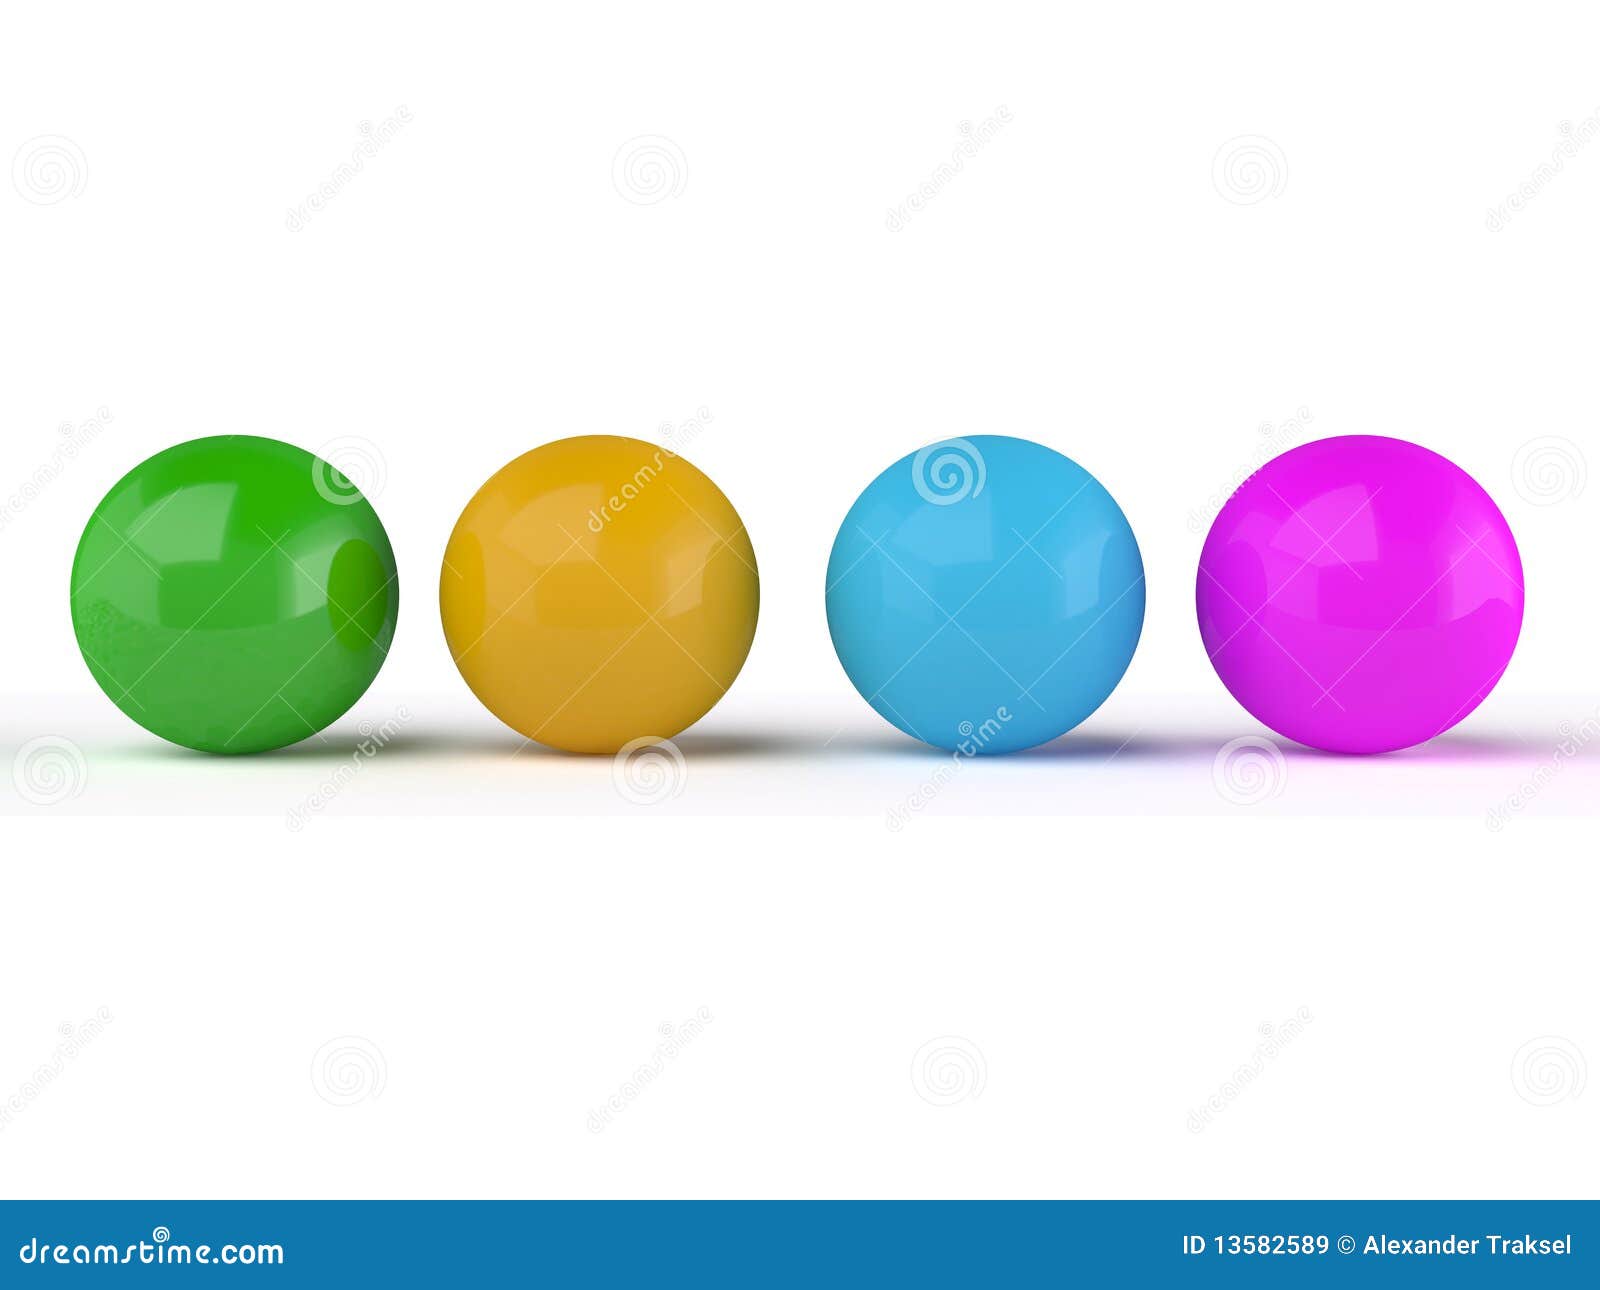 3d balls isolated on white stock illustration. Illustration of plastic ...